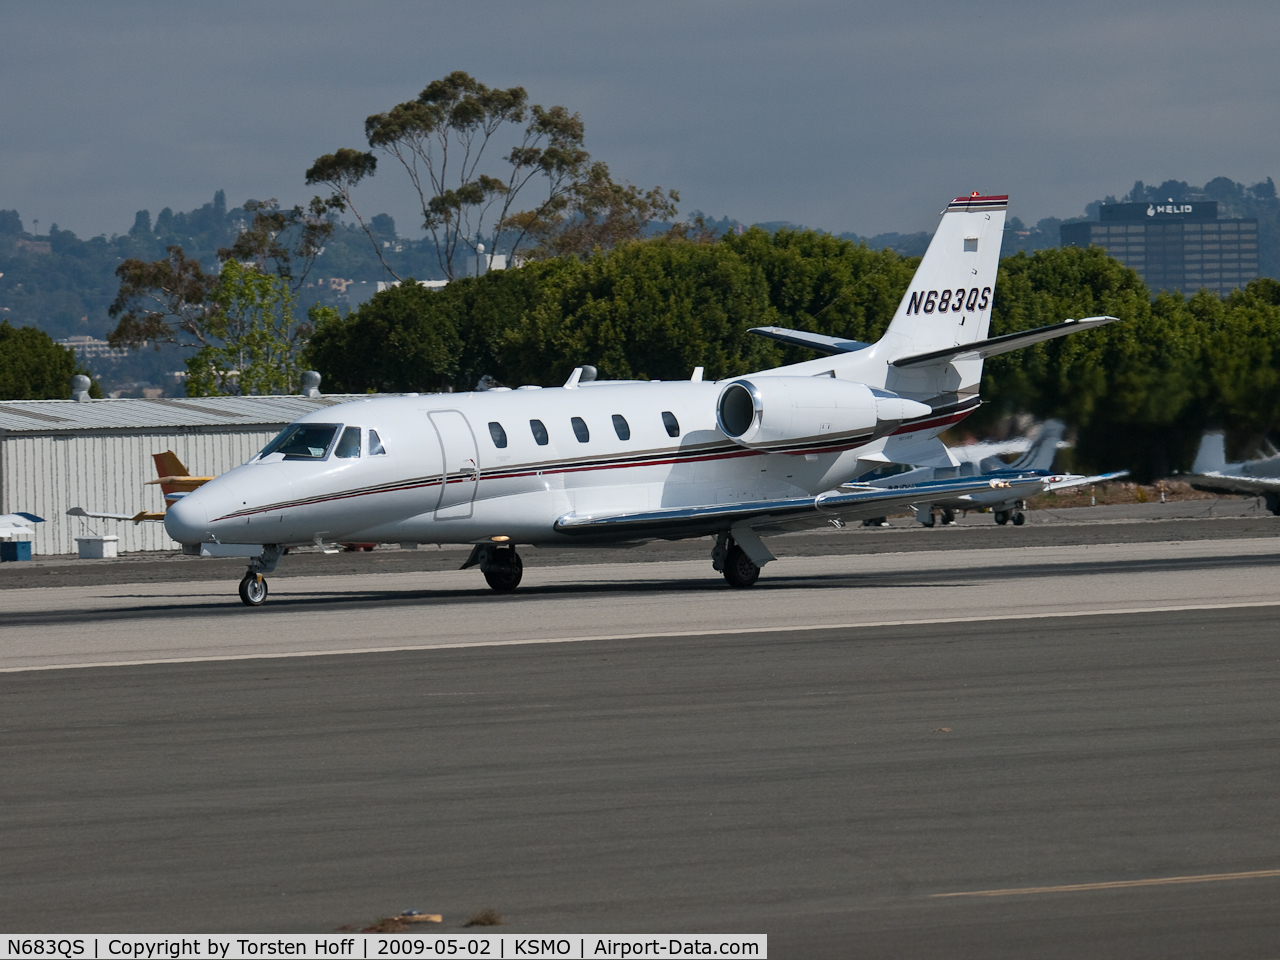 N683QS, 2006 Cessna 560XL Citation XLS C/N 560-5643, N683QS departing from RWY 21